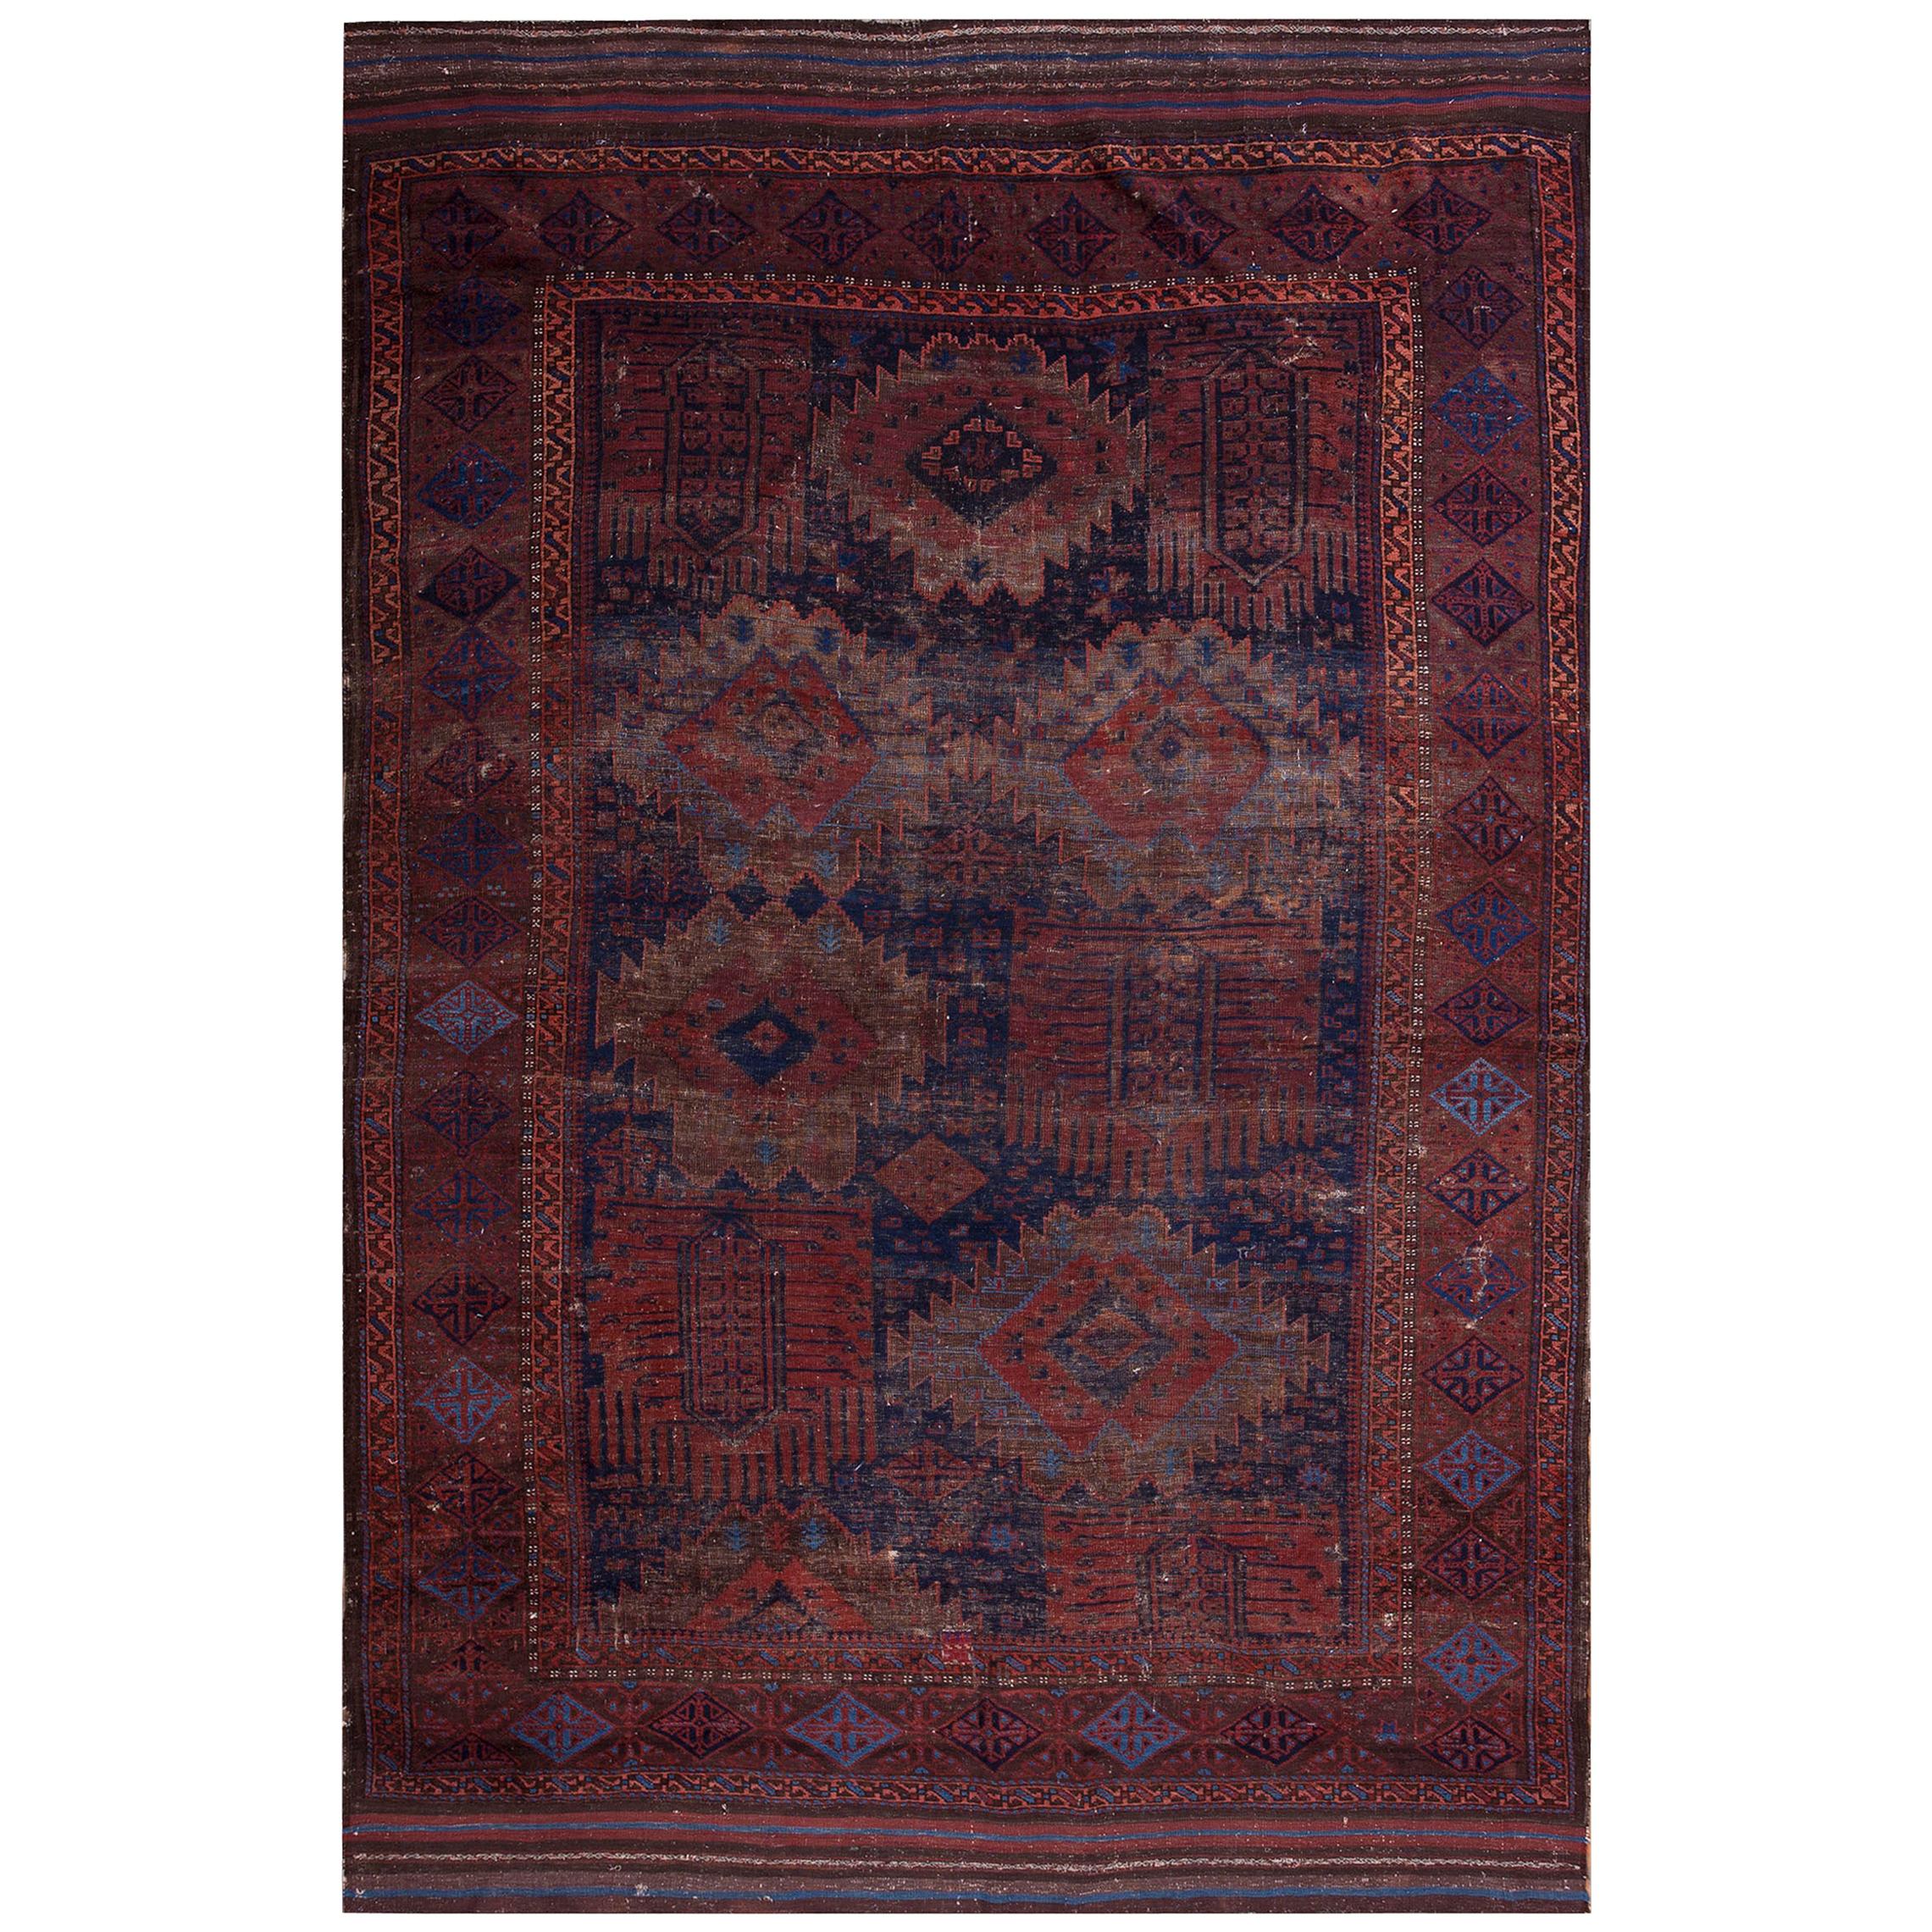 19th Century Persian Baluch Carpet ( 6'2" x 10'2" - 188 x 310 )